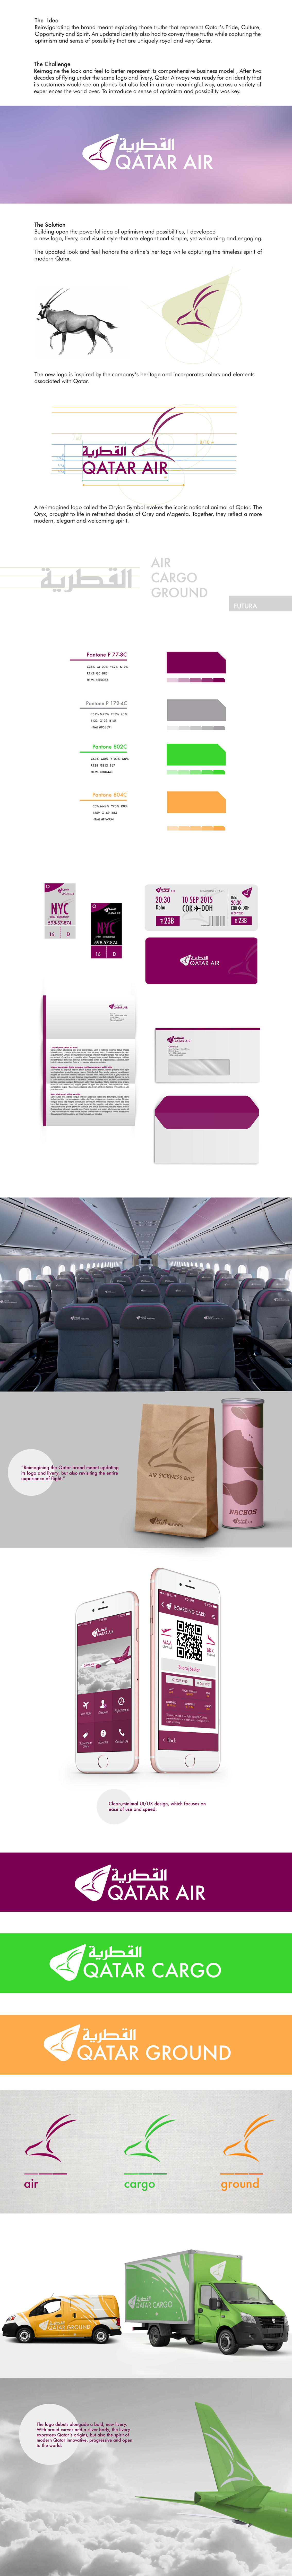 airline Airways rebranding Qatar flight airport Experience design print airplane Livery identity